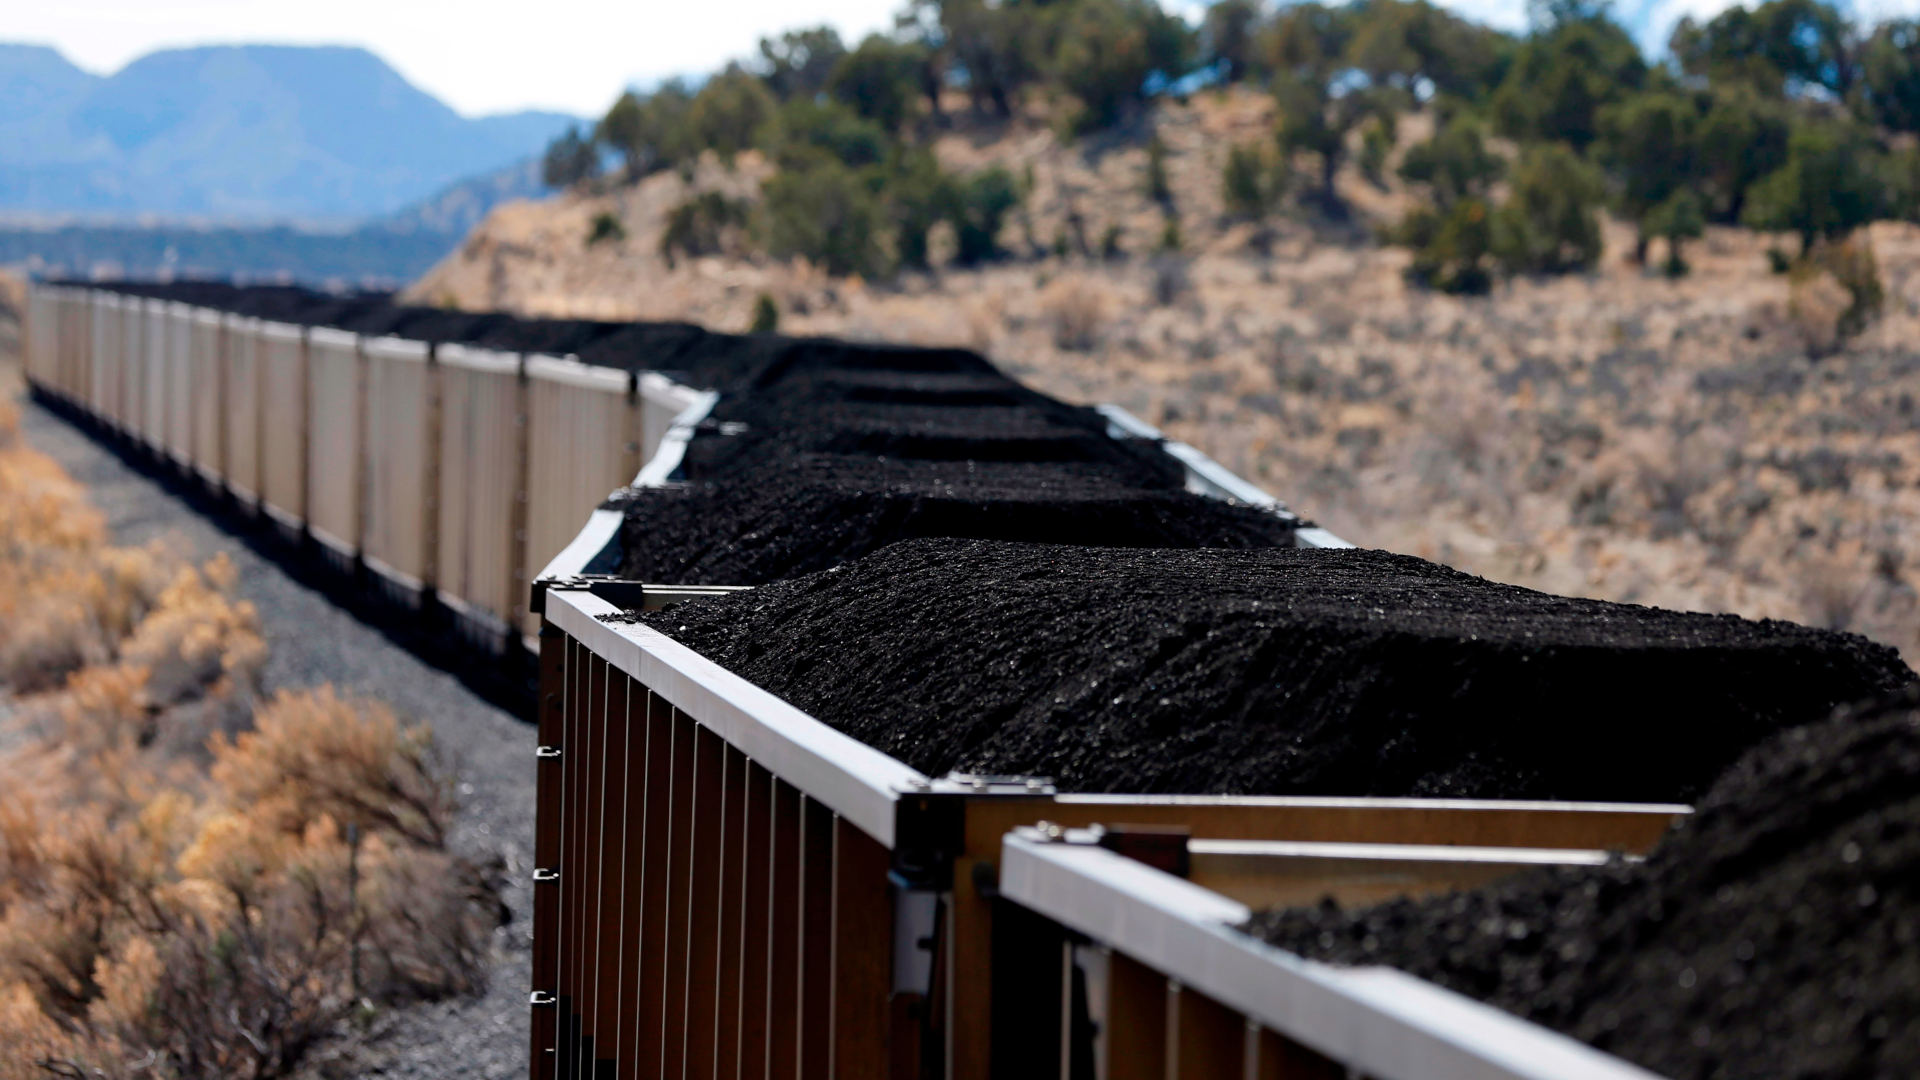 Coal is transported by rail in Utah.